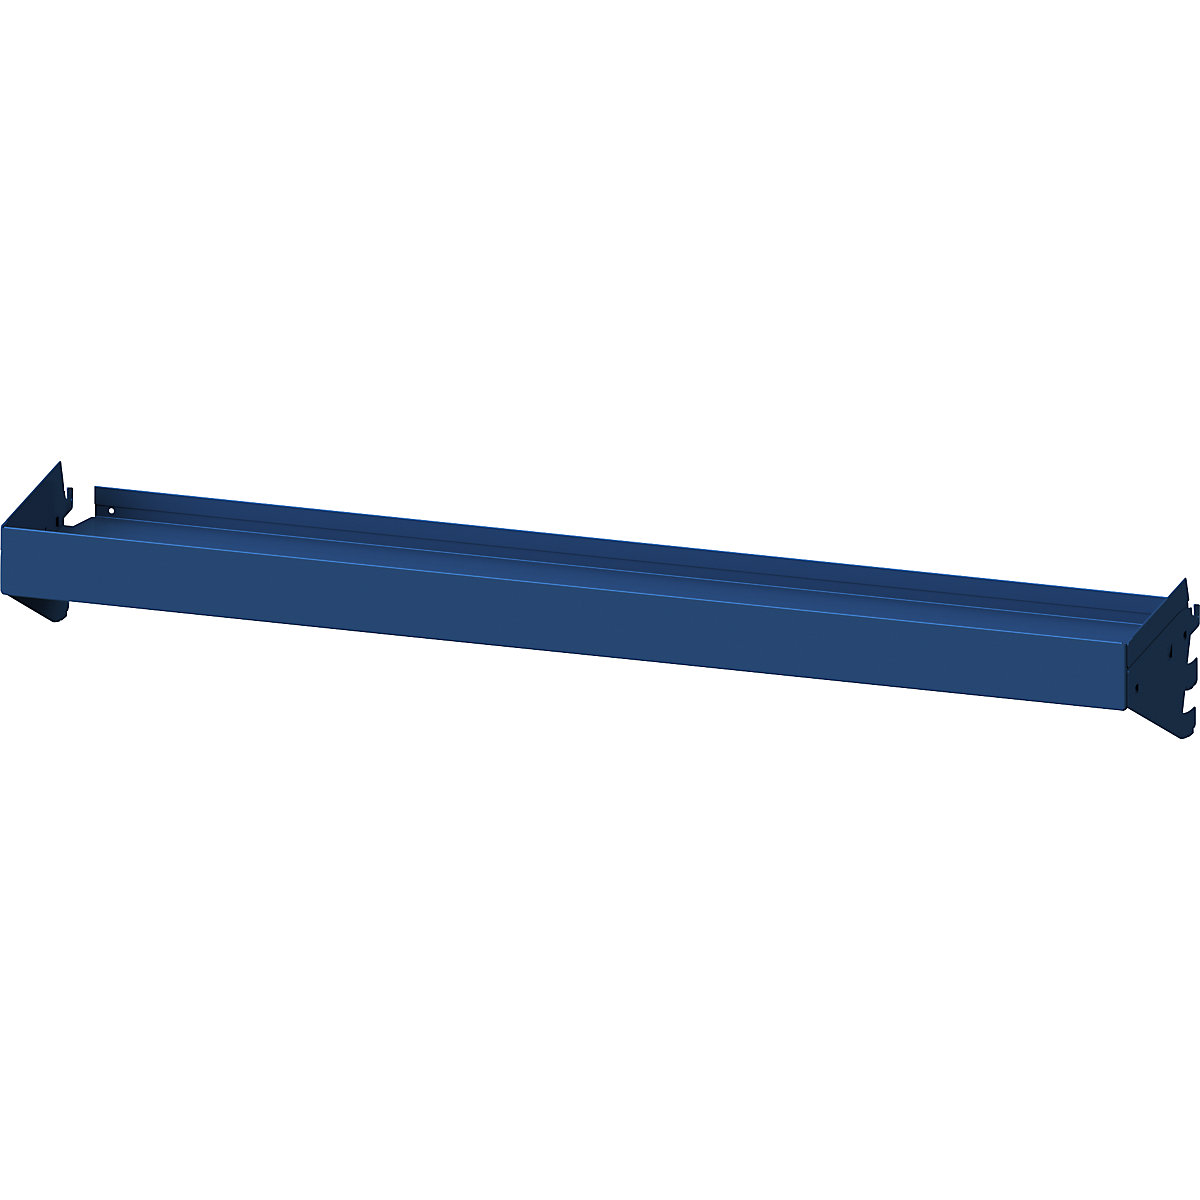 Ripiano a vasca – ANKE, alzatina 75 mm, largh. x prof. 1250 x 250 mm, blu-5